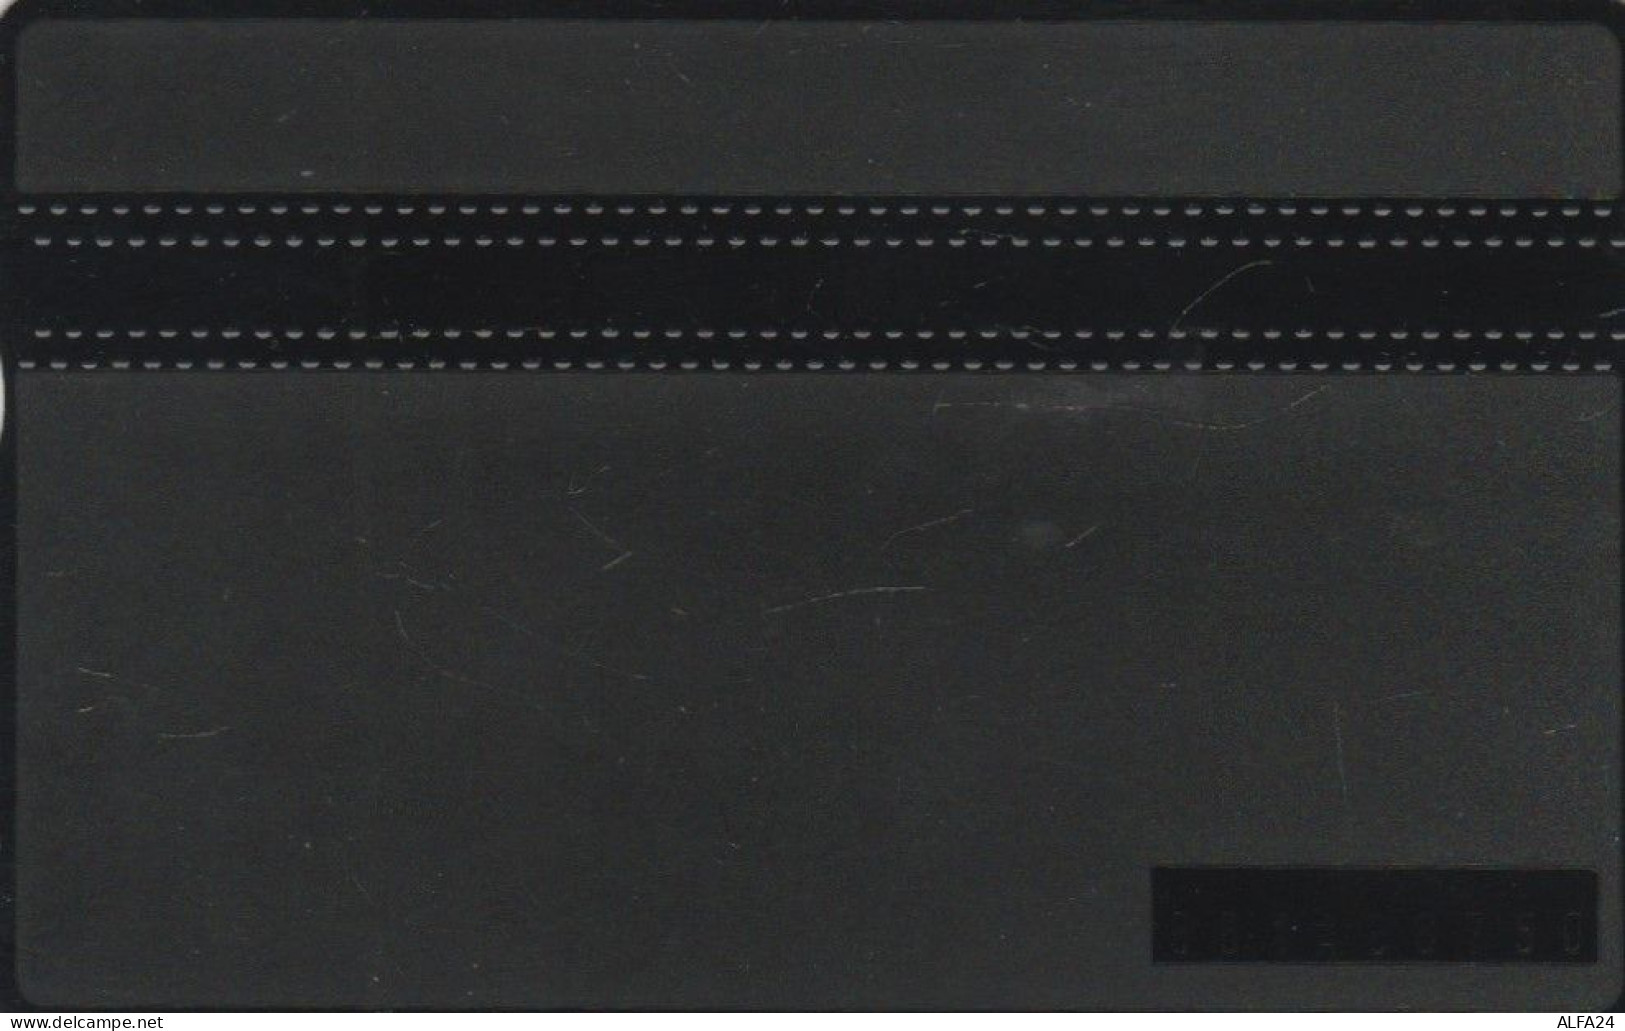 PHONE CARD BELGIO LANDIS (CK6006 - Senza Chip